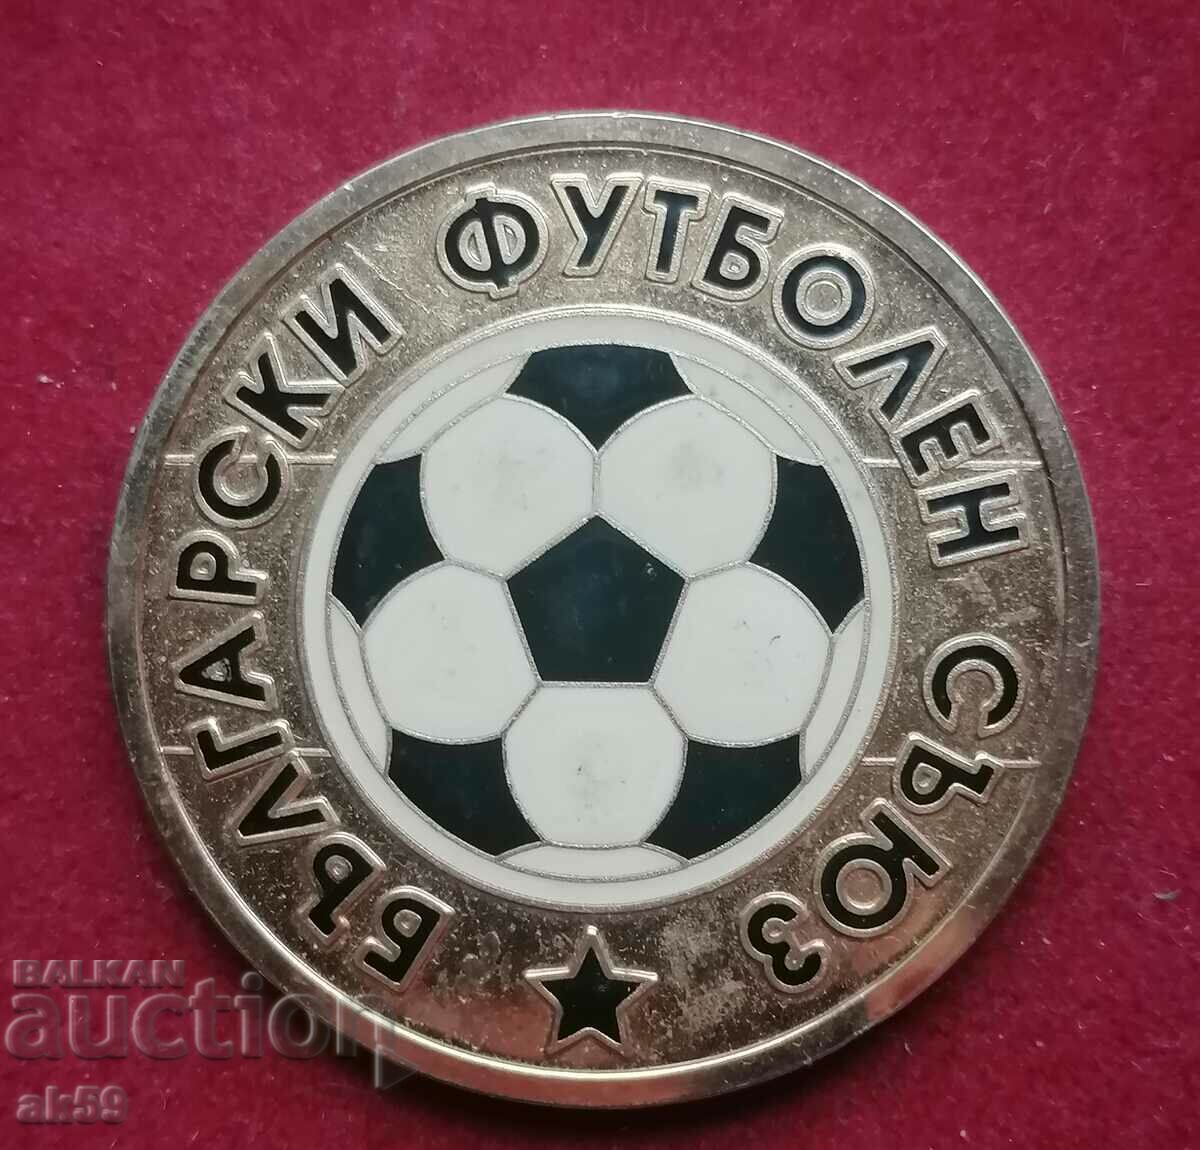 football plaque "Euro Portugal 2004"